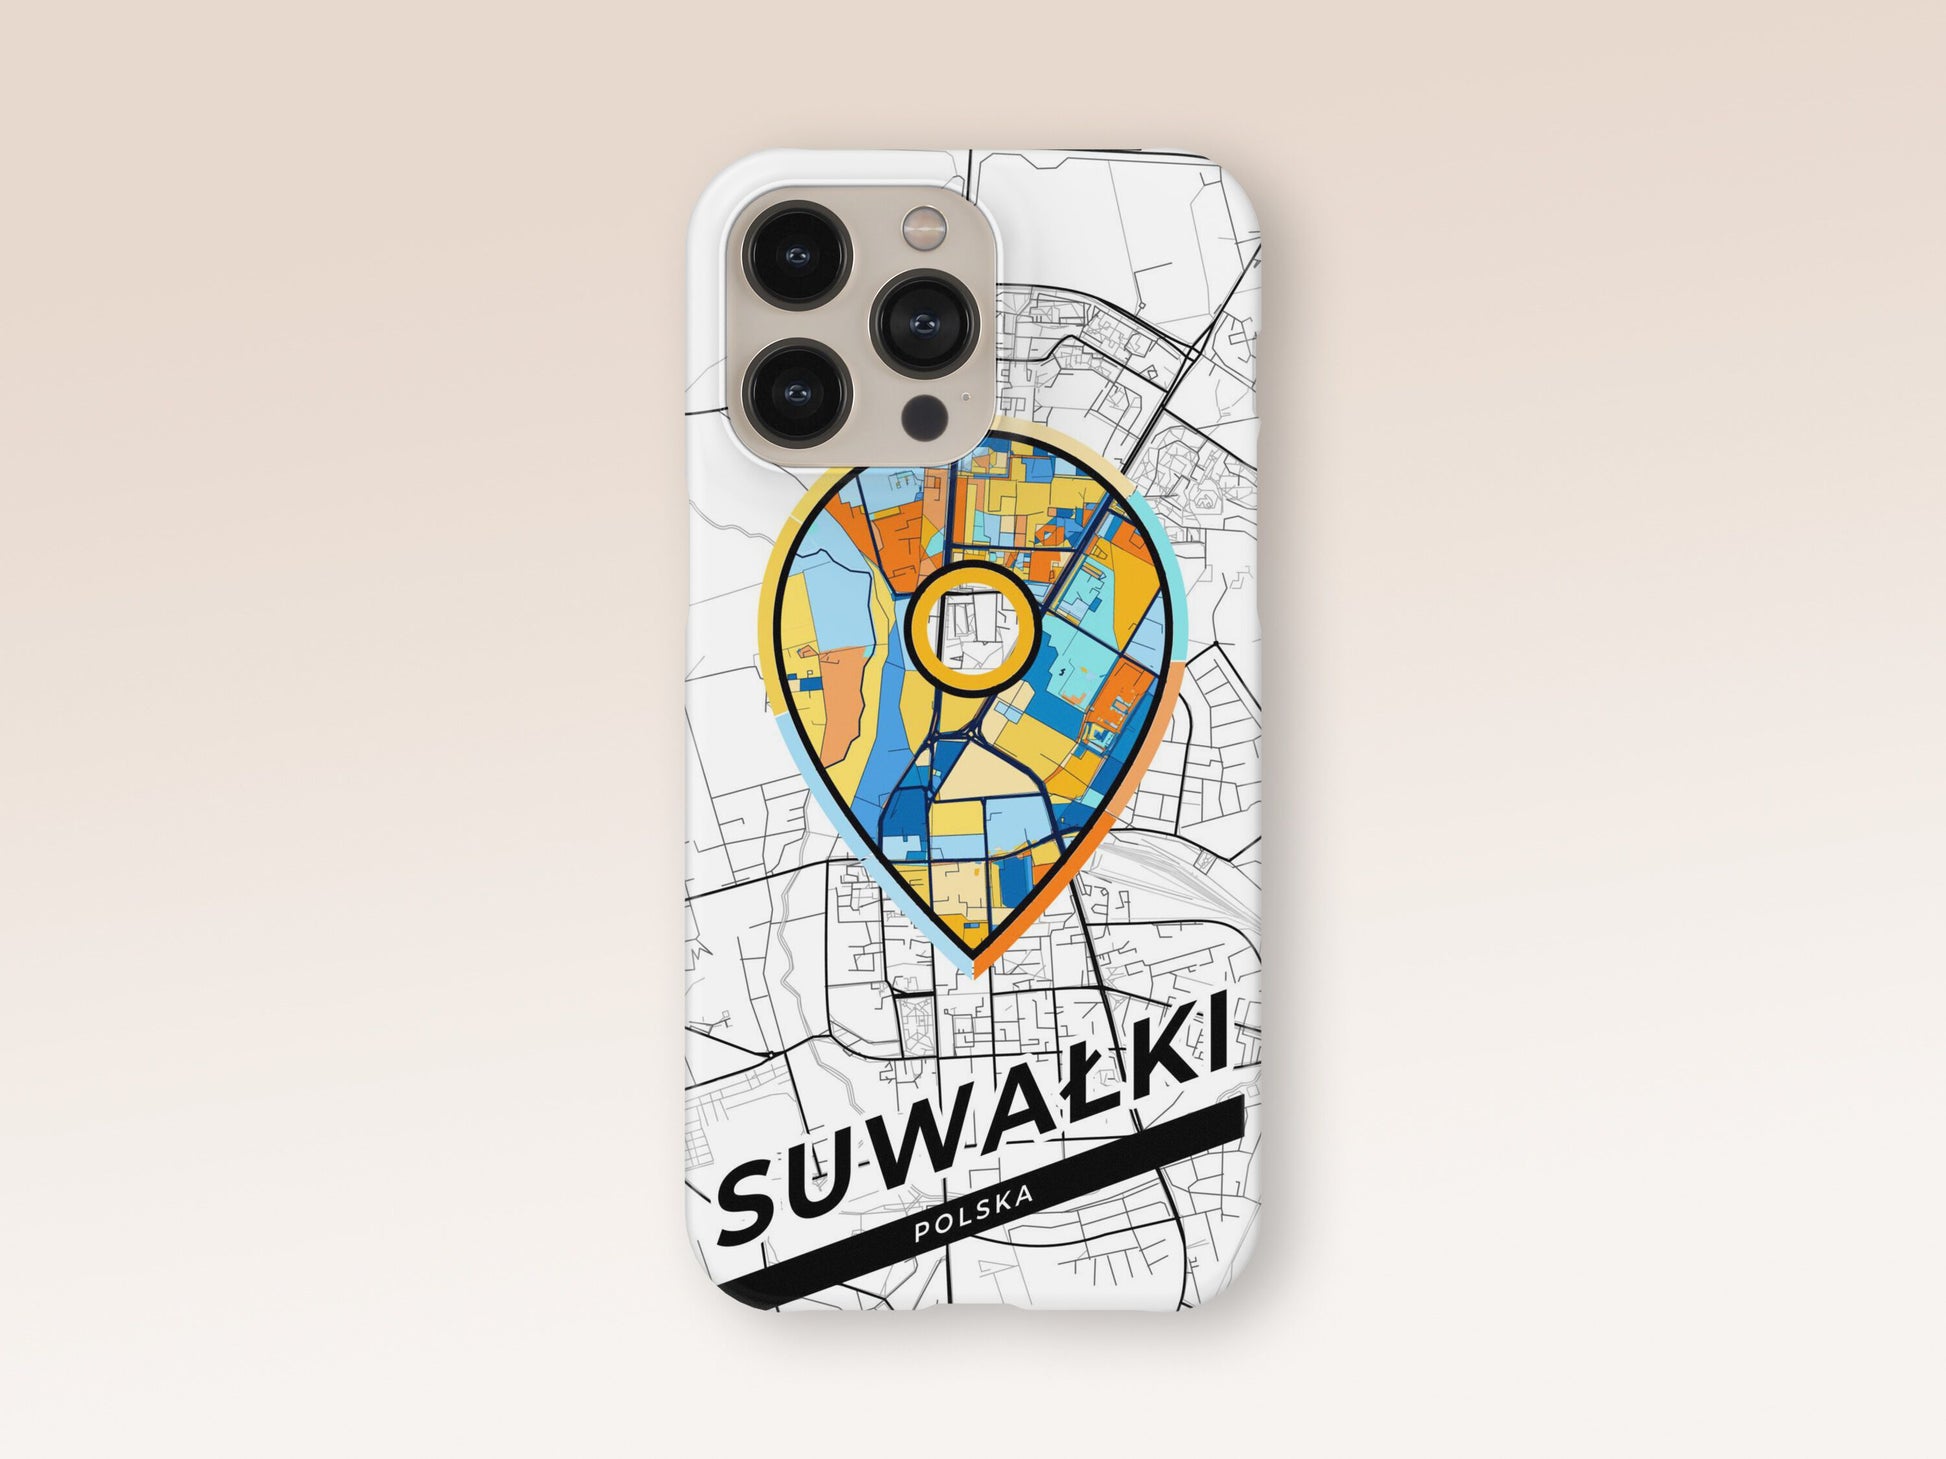 Suwałki Poland slim phone case with colorful icon 1